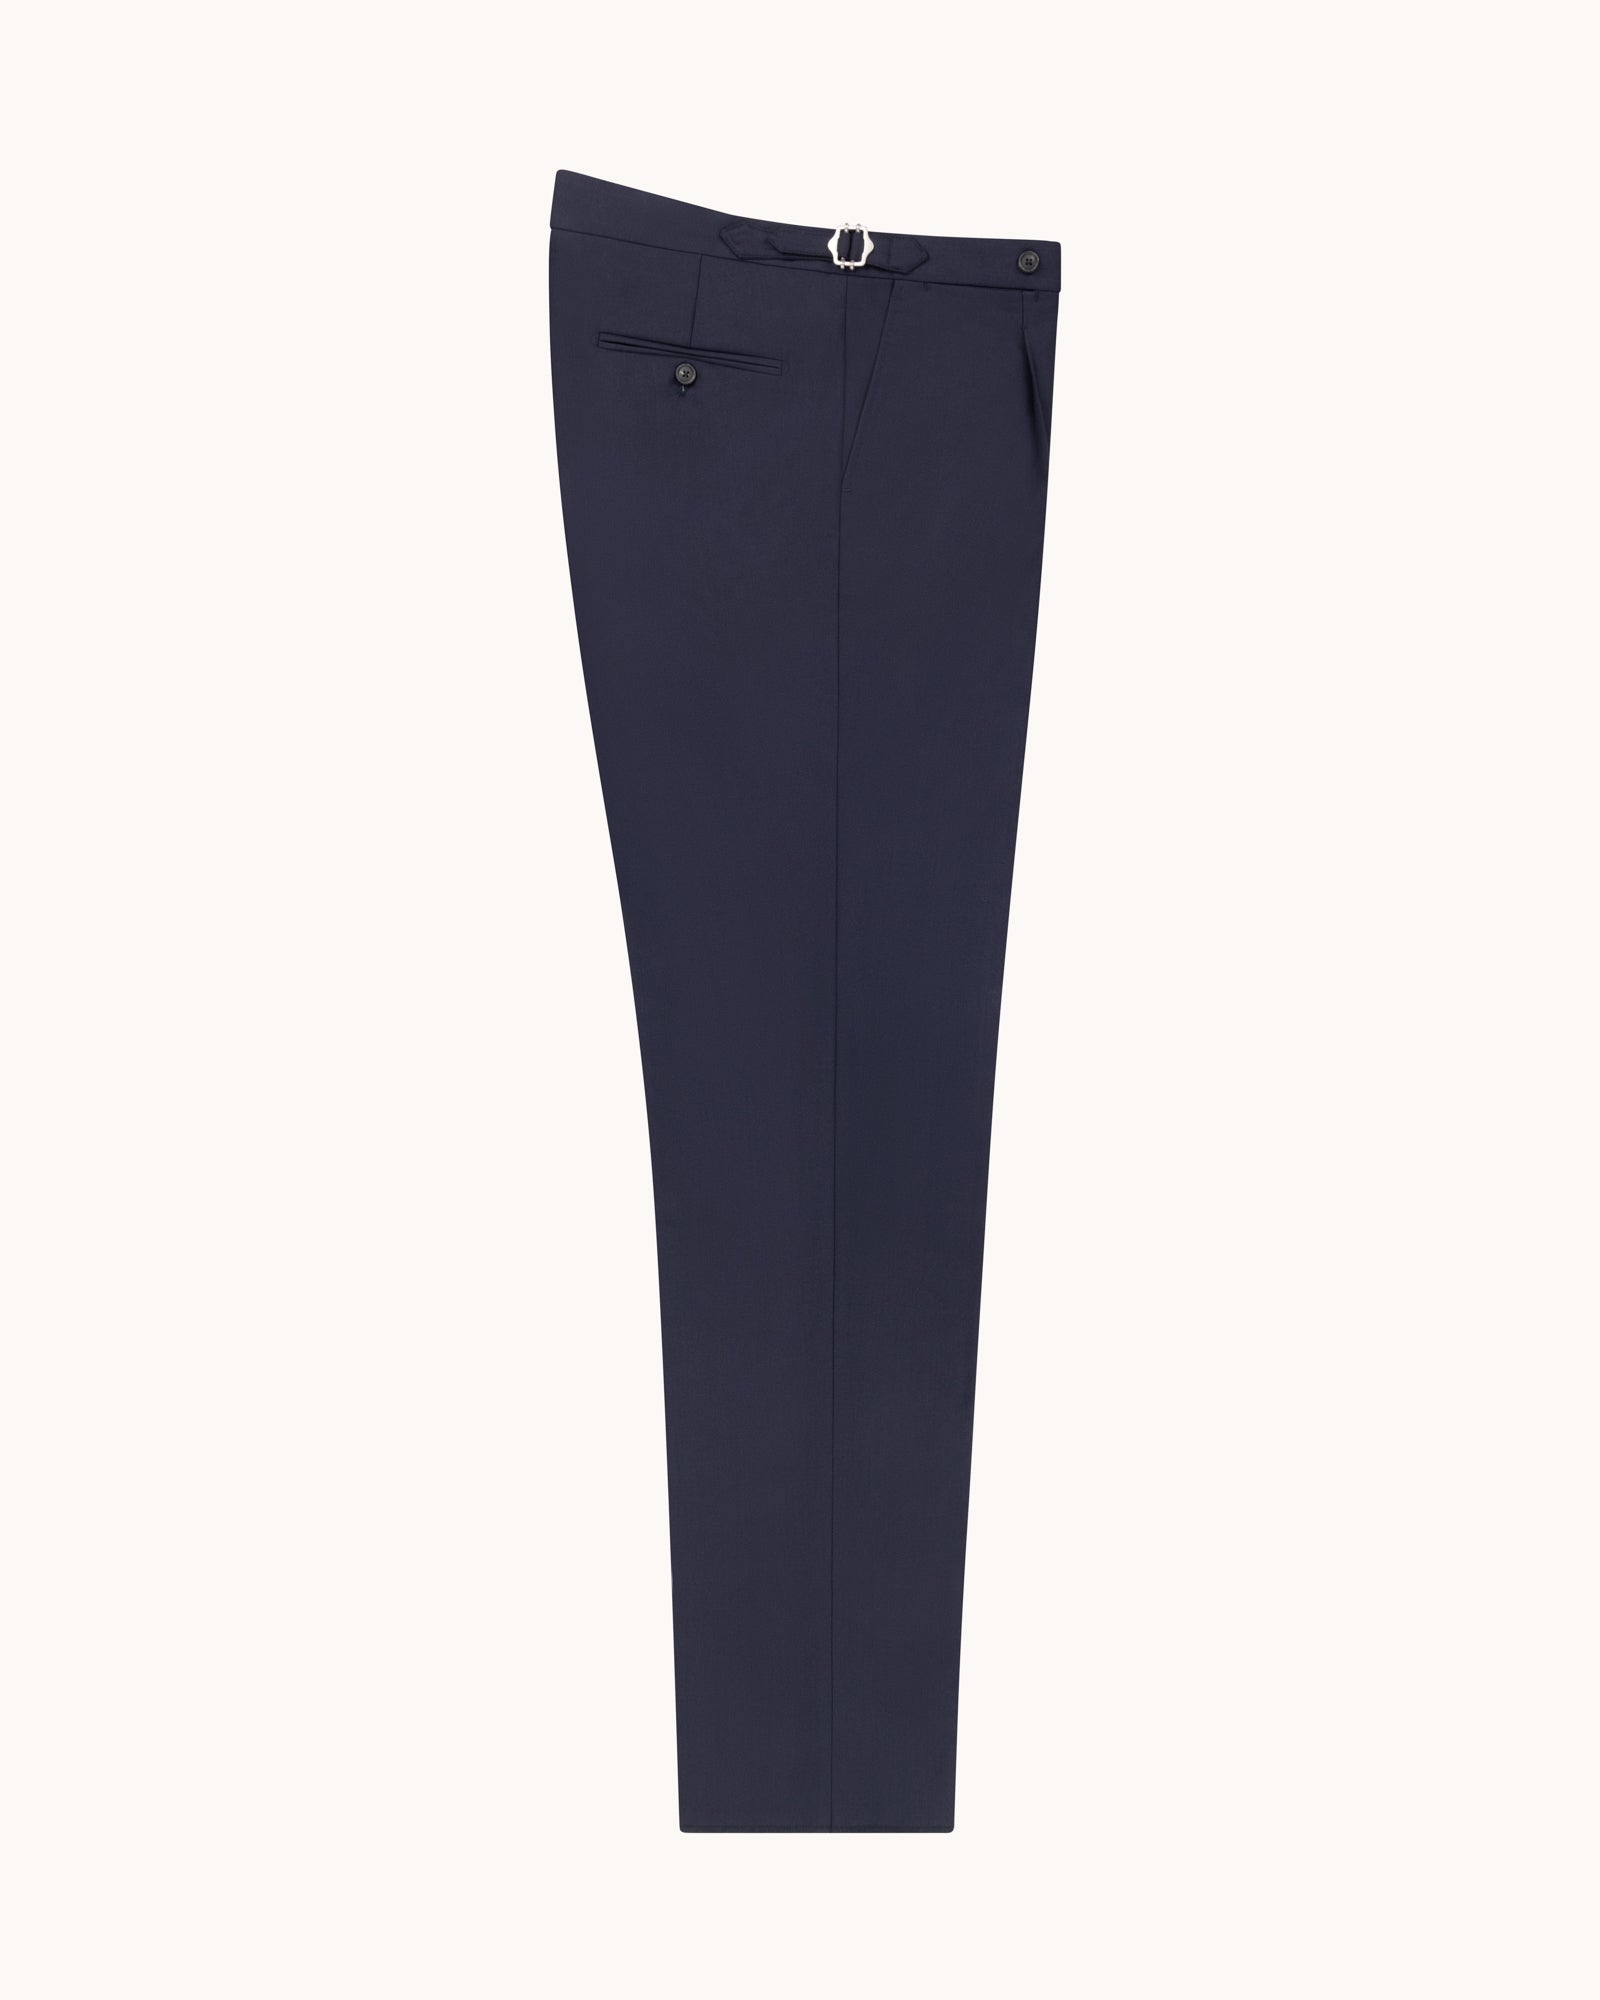 Single Pleat Trouser - Navy Herringbone Wool